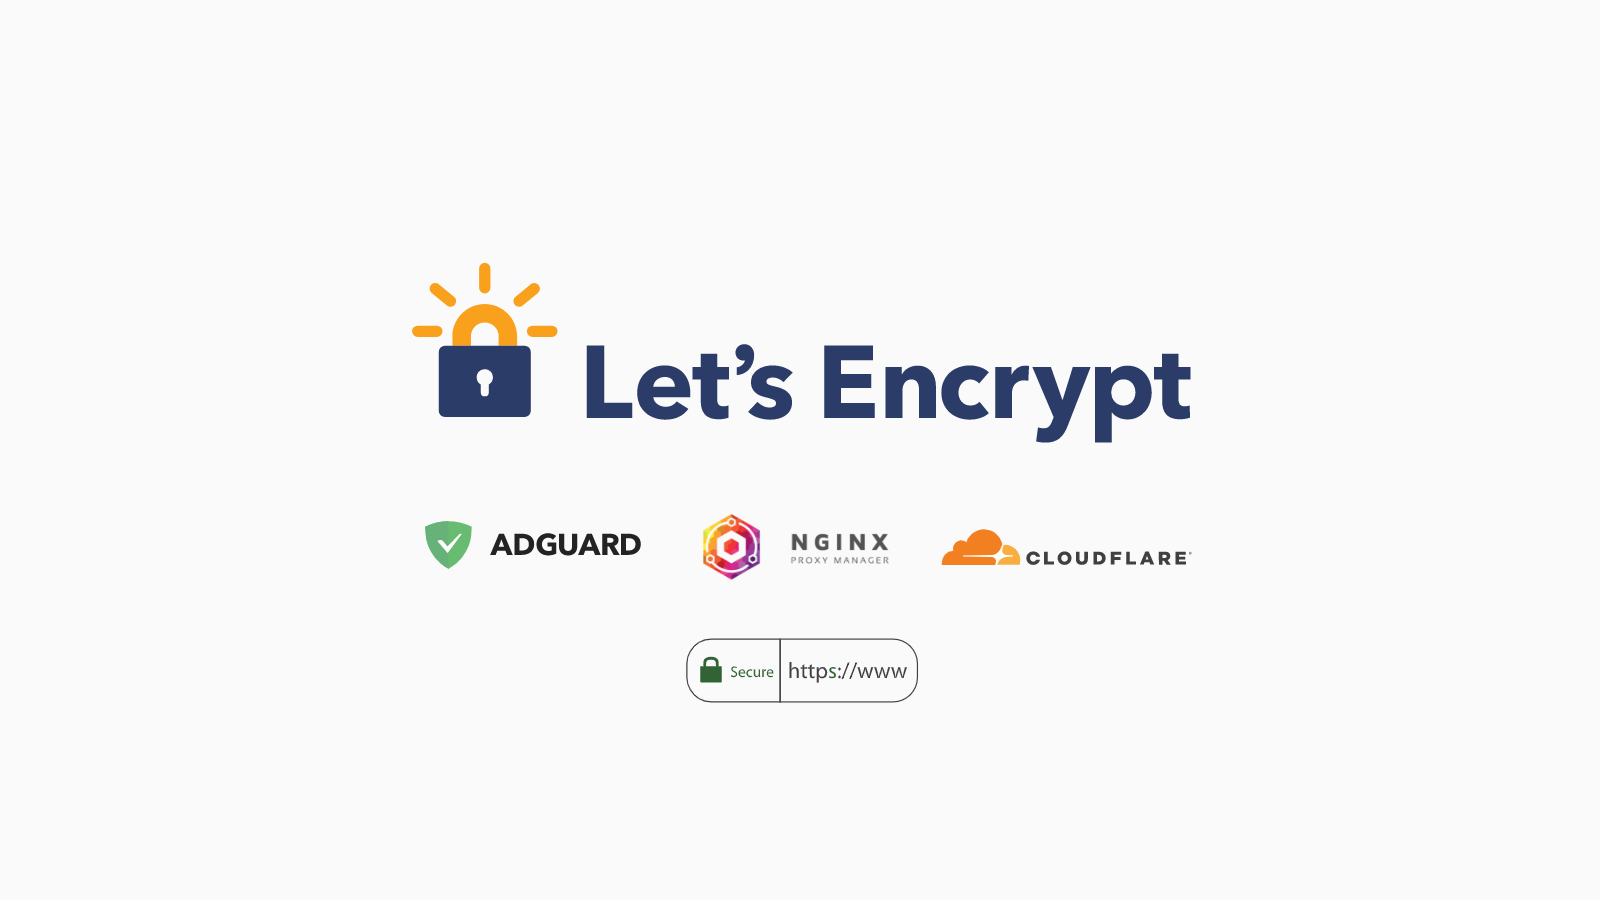 Thiết lập chứng chỉ SSL Let’s Encrypt cho Homelab sử dụng Nginx Proxy Manager + Cloudflare + AdGuard Home